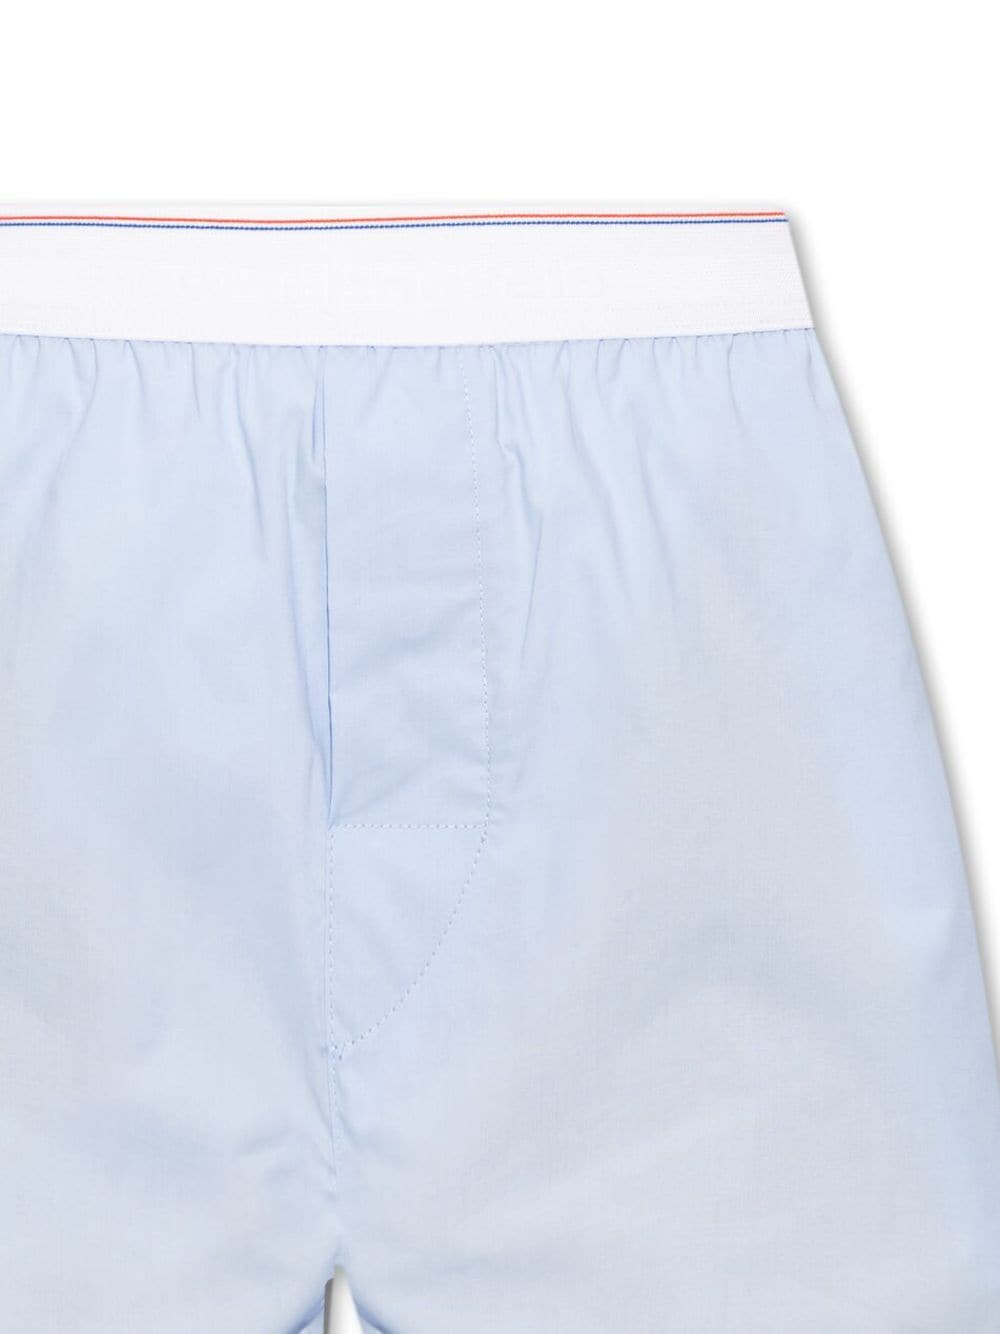 Alexander Wang logo-waistband Cotton Shorts - Farfetch